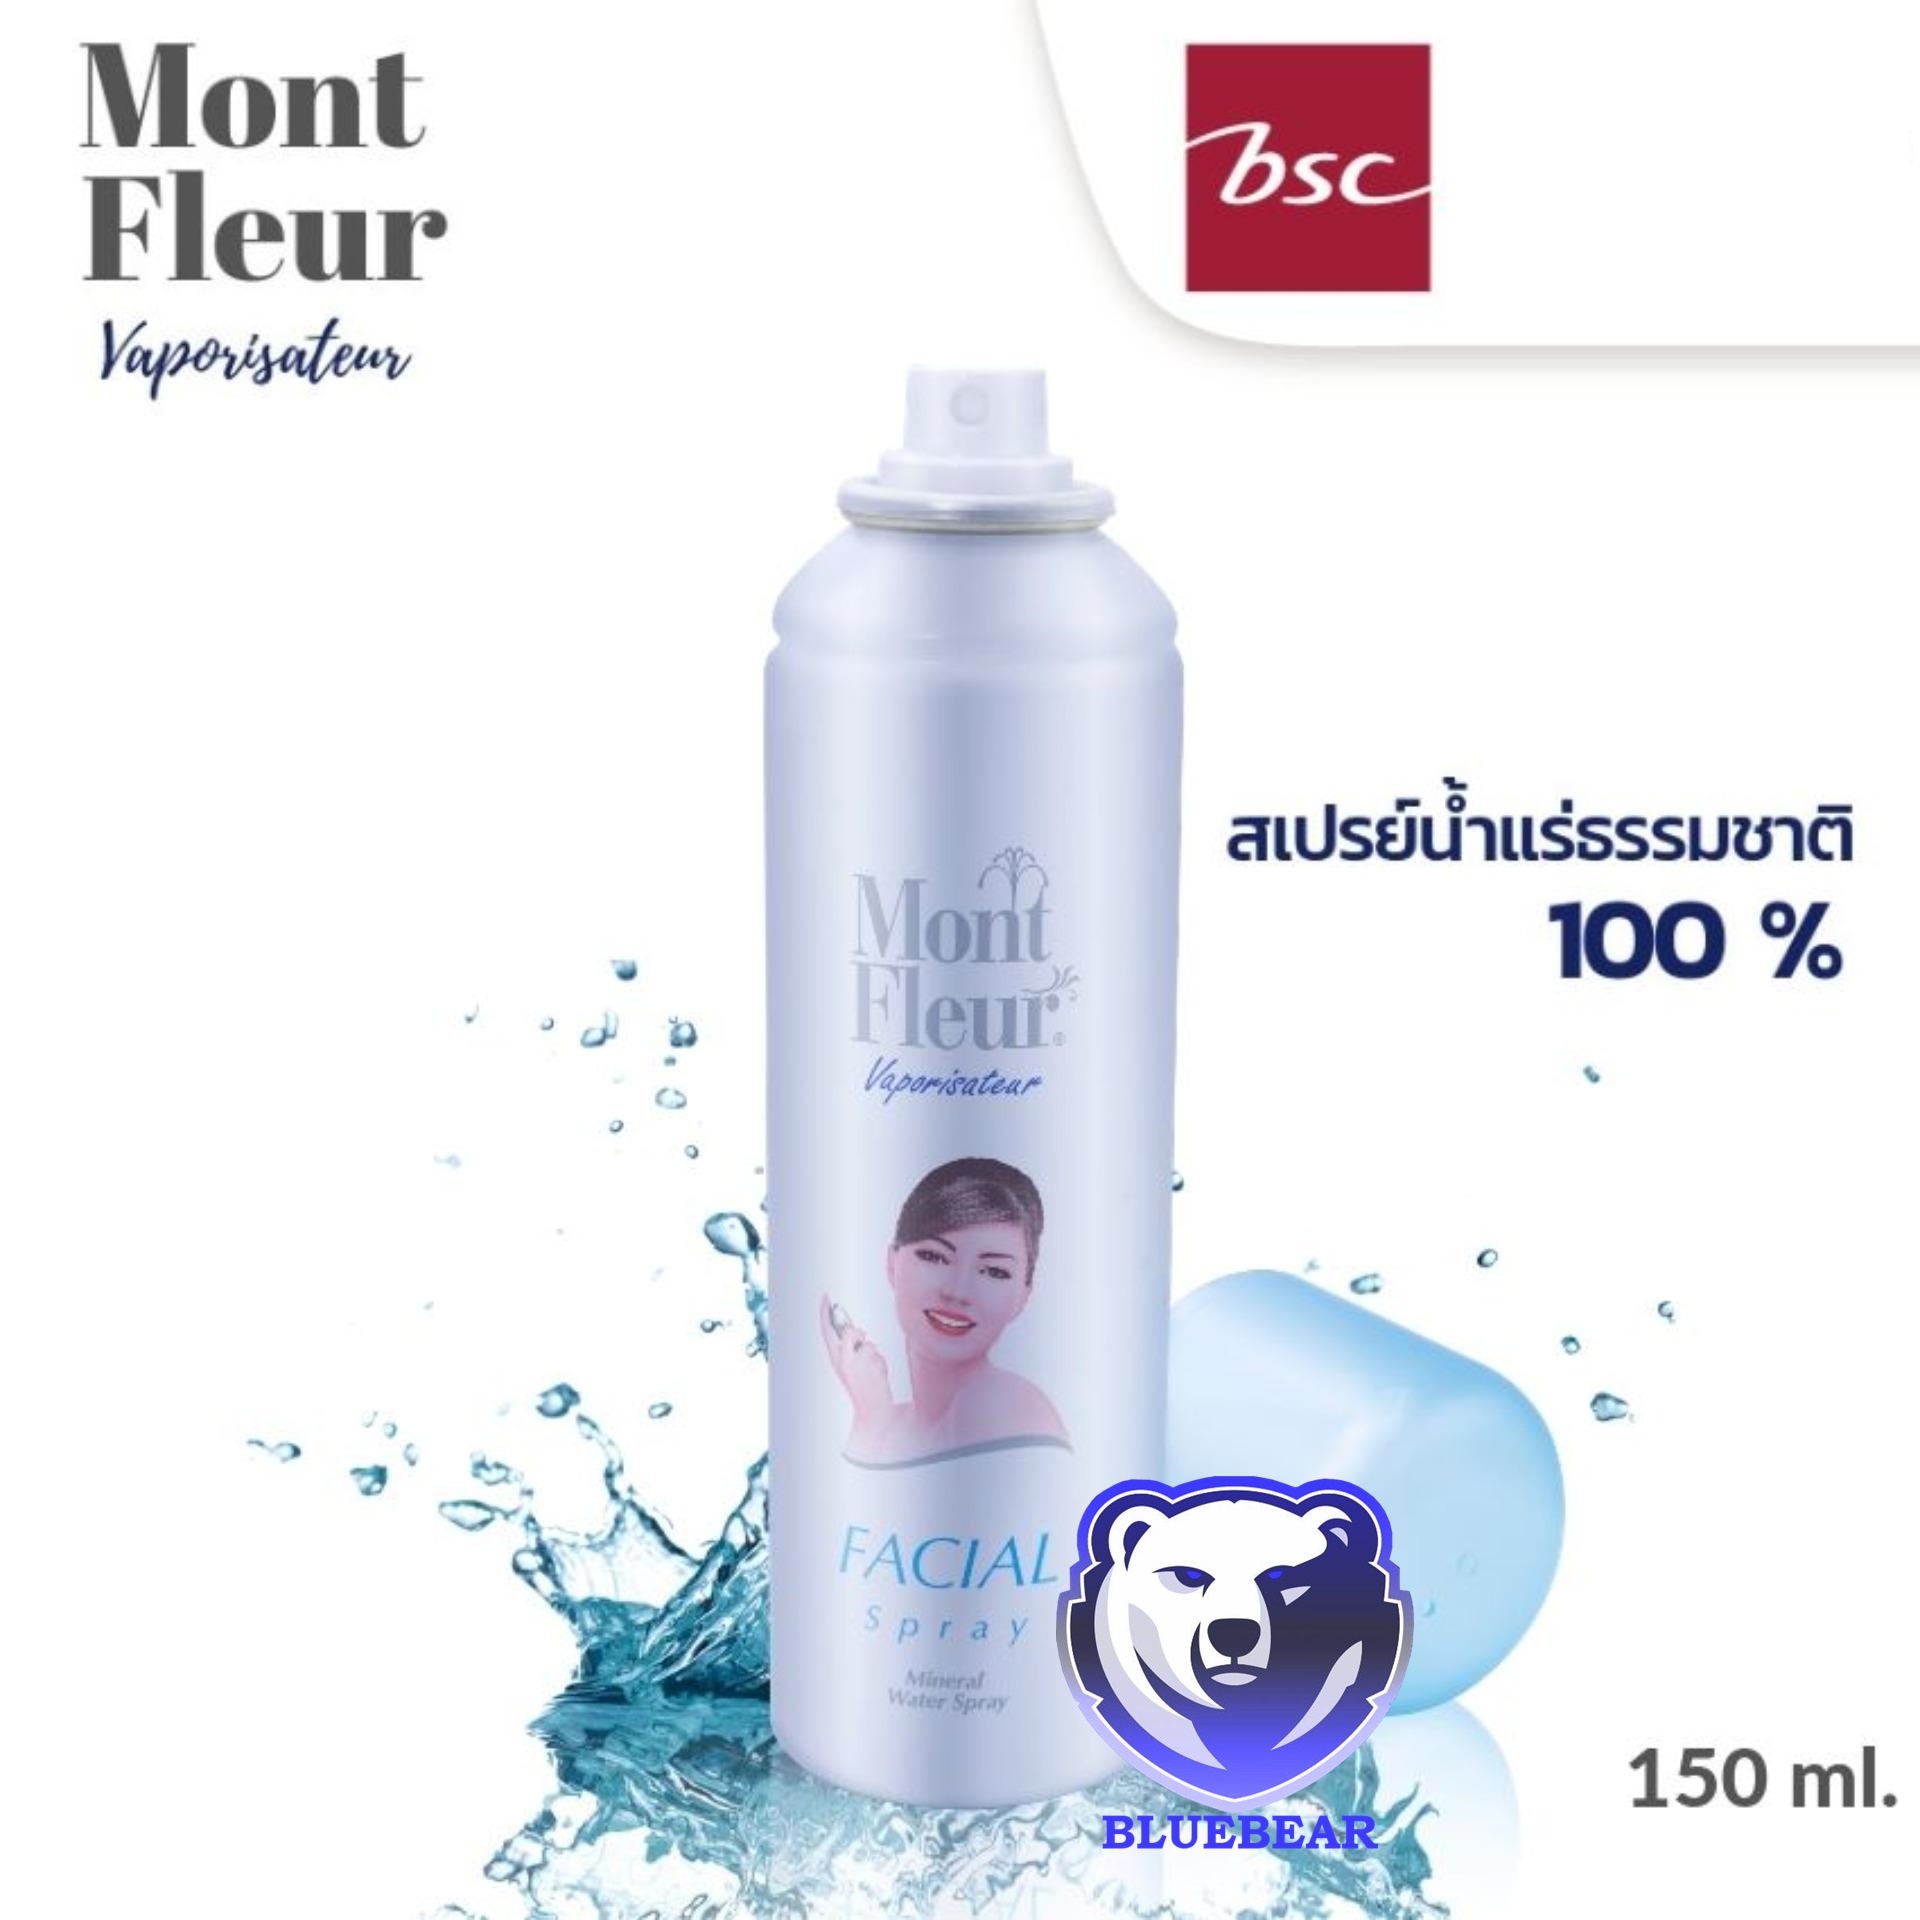 Mont Fleur Mineral Water Facial Spray Mist 150ml. มองต์เฟลอ สเปรย์ น้ำแร่ เติมความชุ่มชื่นให้ผิวเปล่งปลั่งดูอ่อนเยาว์